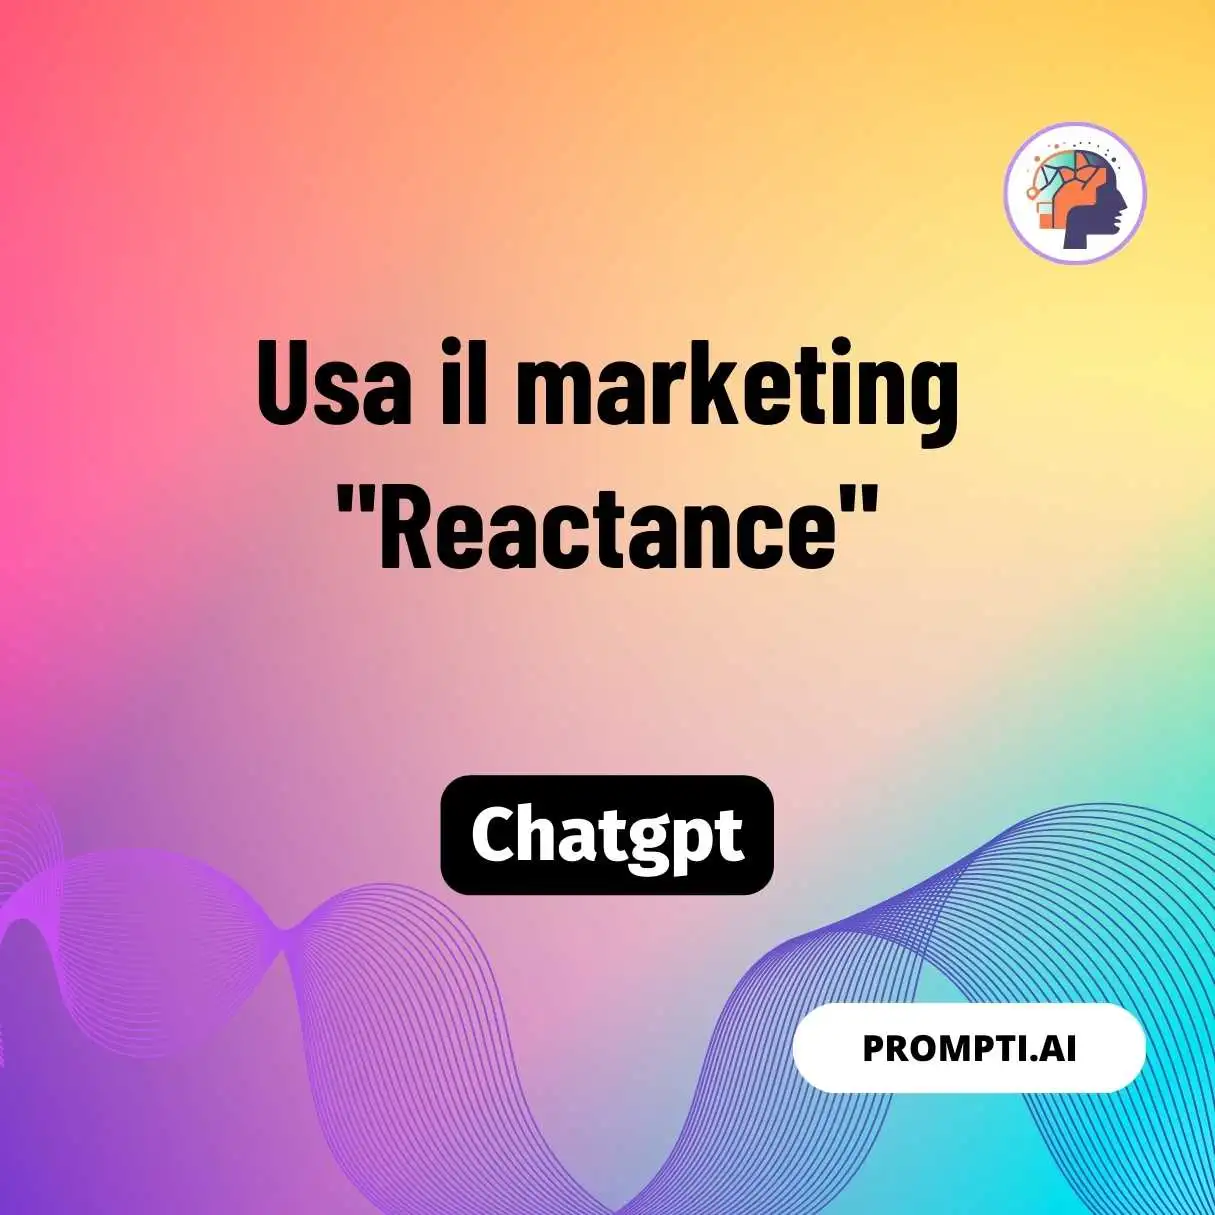 Usa il marketing “Reactance”